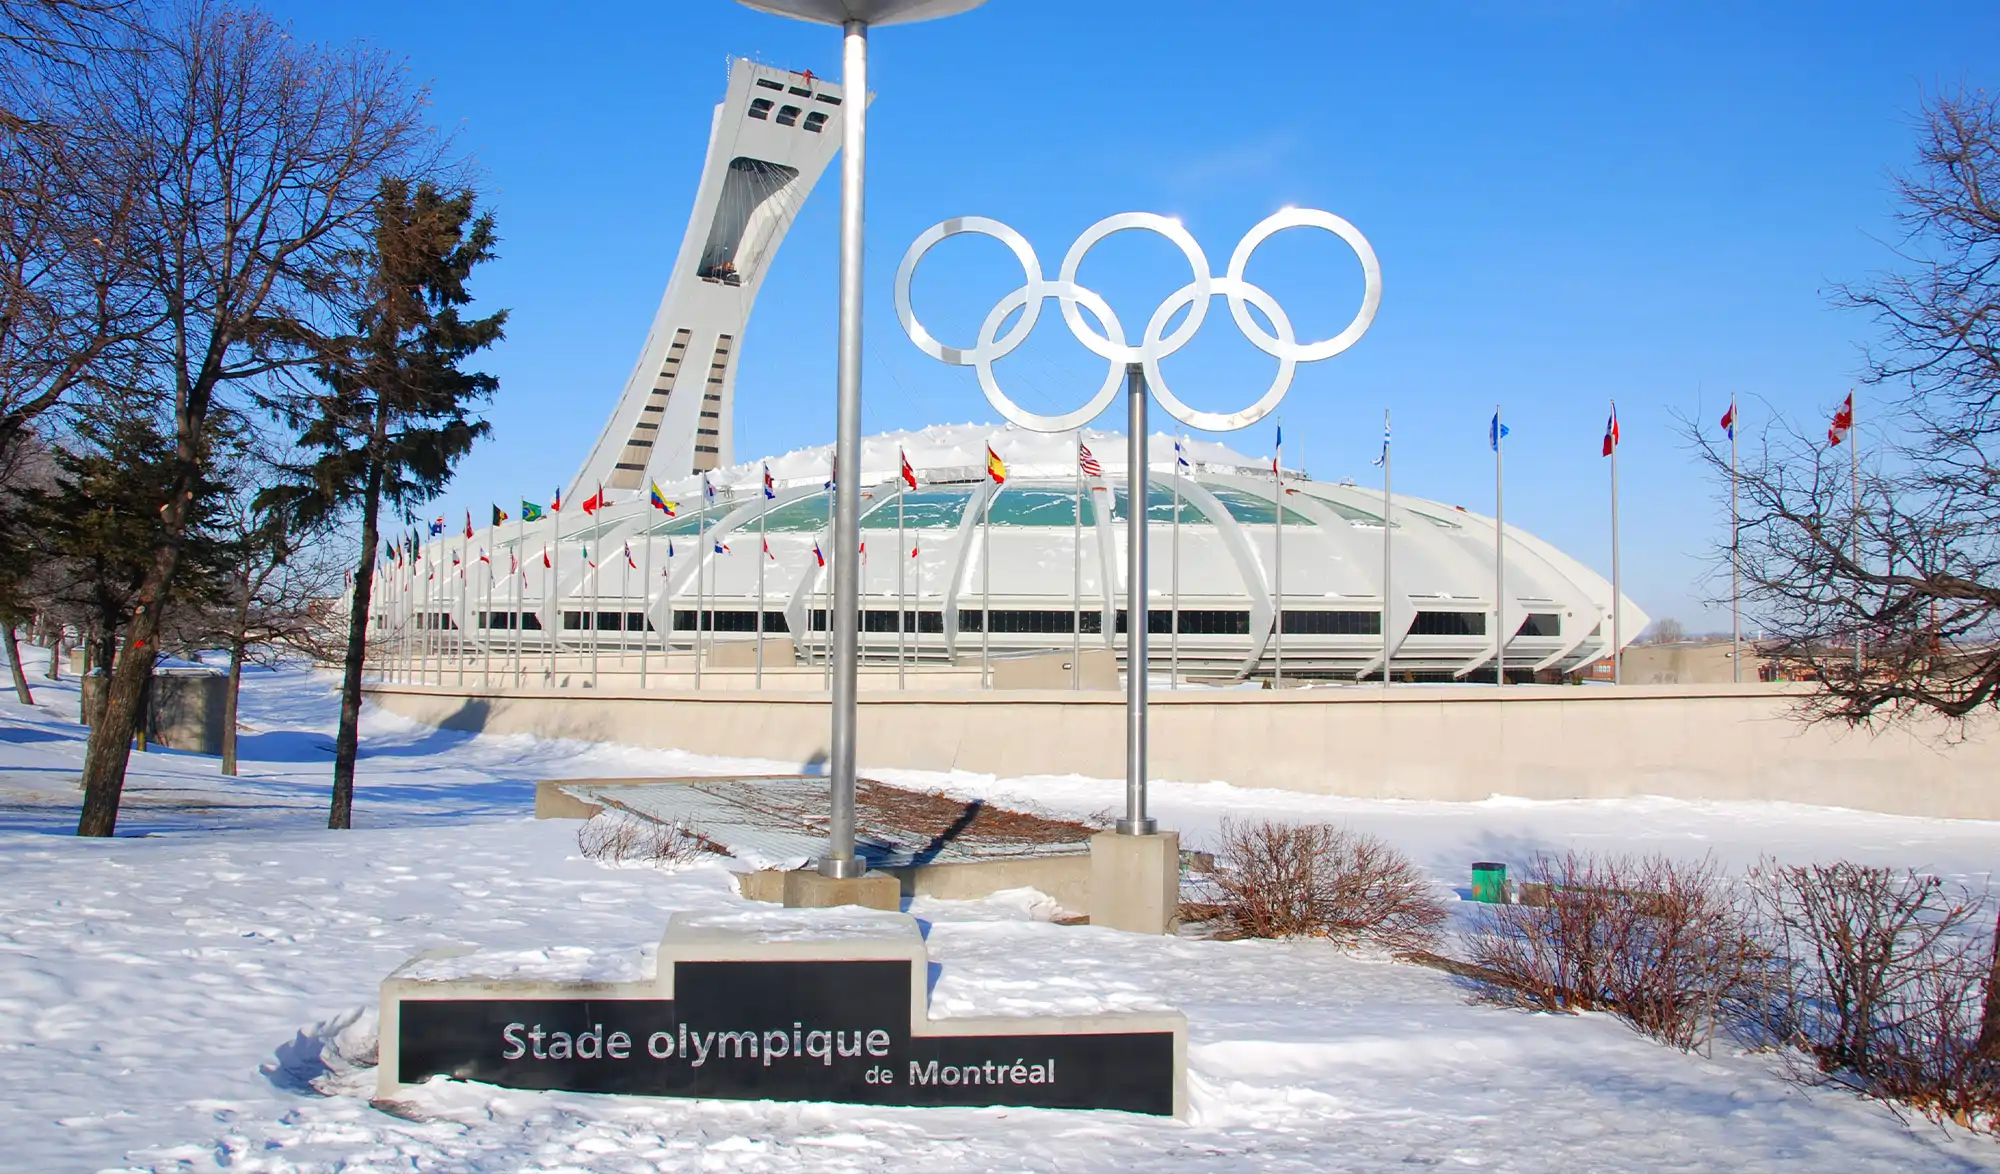 Stade Olympique de Montreal